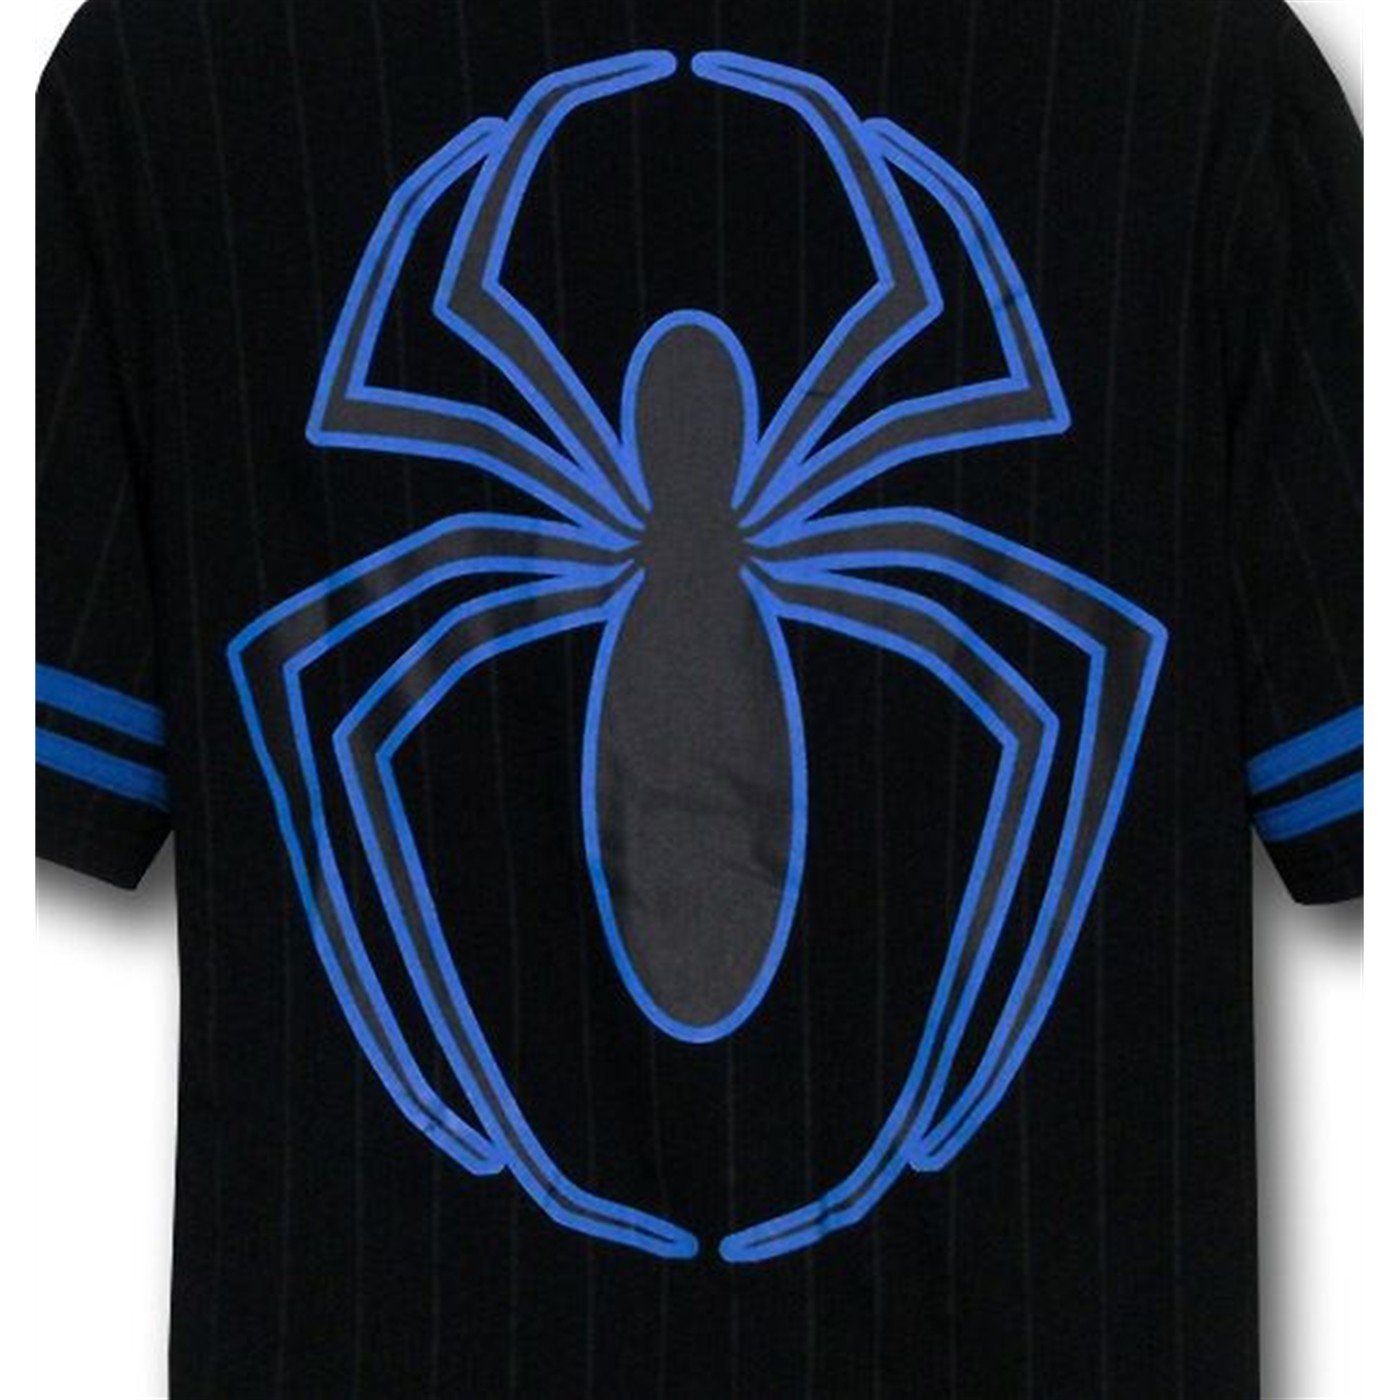 Spiderman Black Baseball Jersey